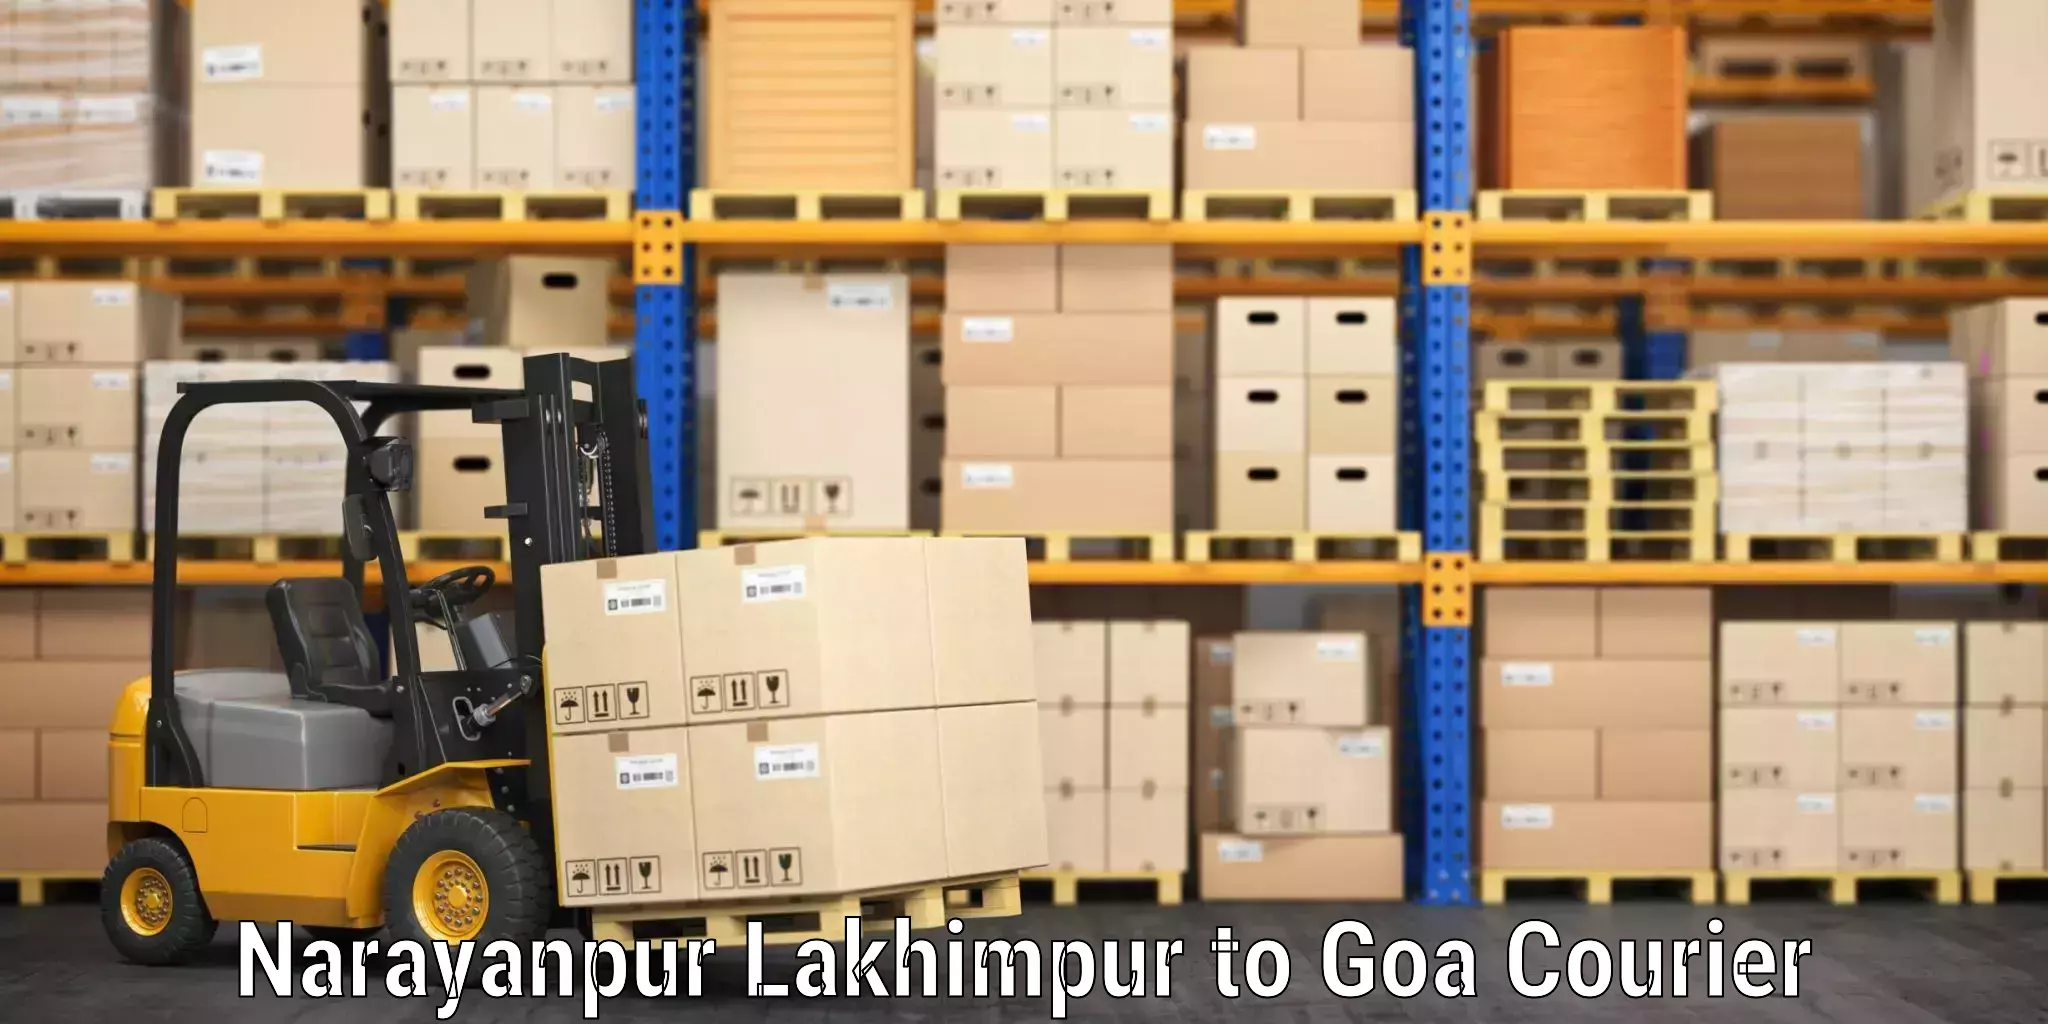 Baggage shipping service in Narayanpur Lakhimpur to Goa